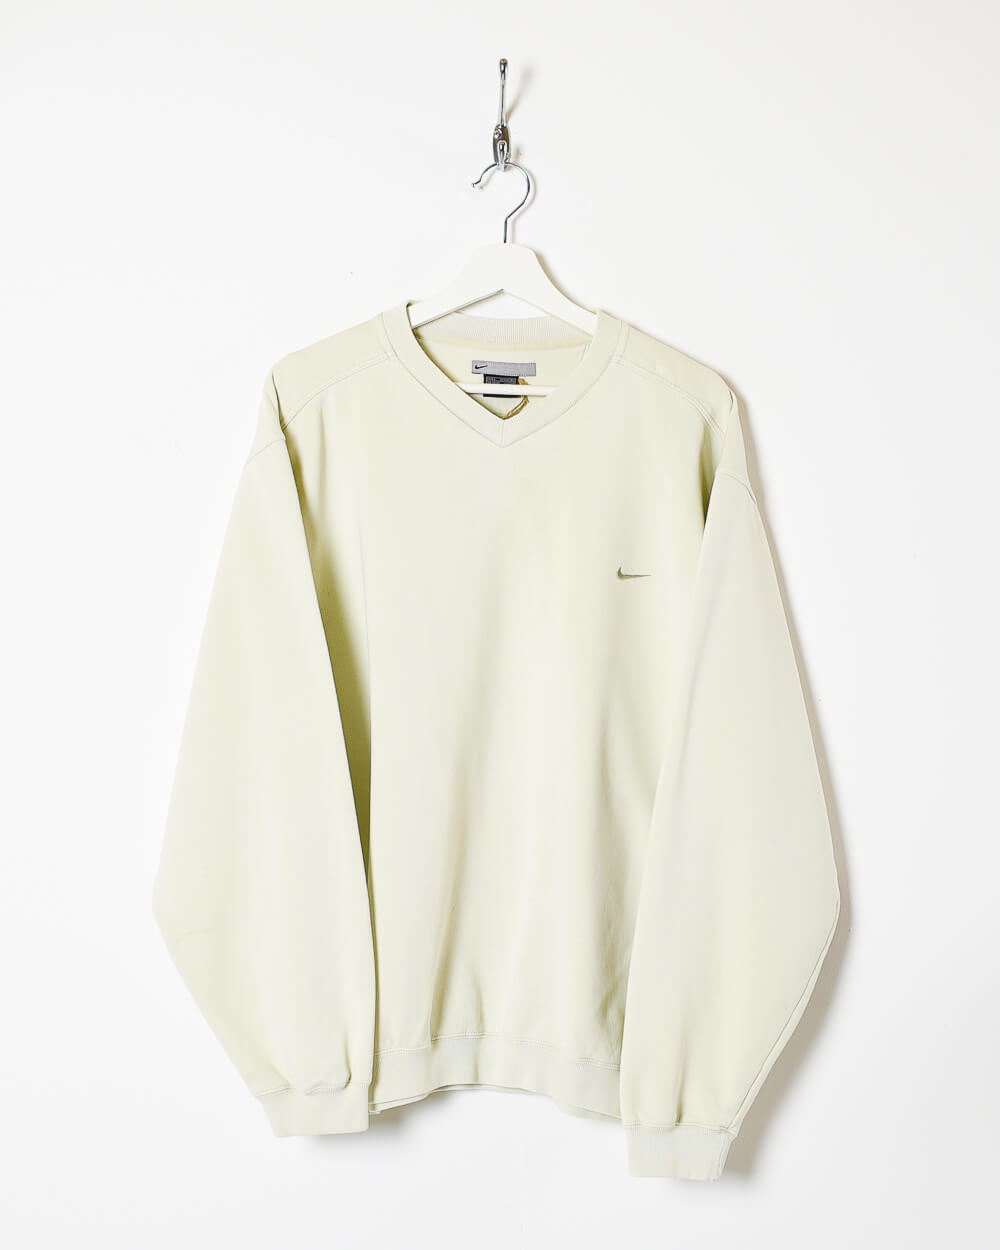 Neutral Nike Sweatshirt - Large